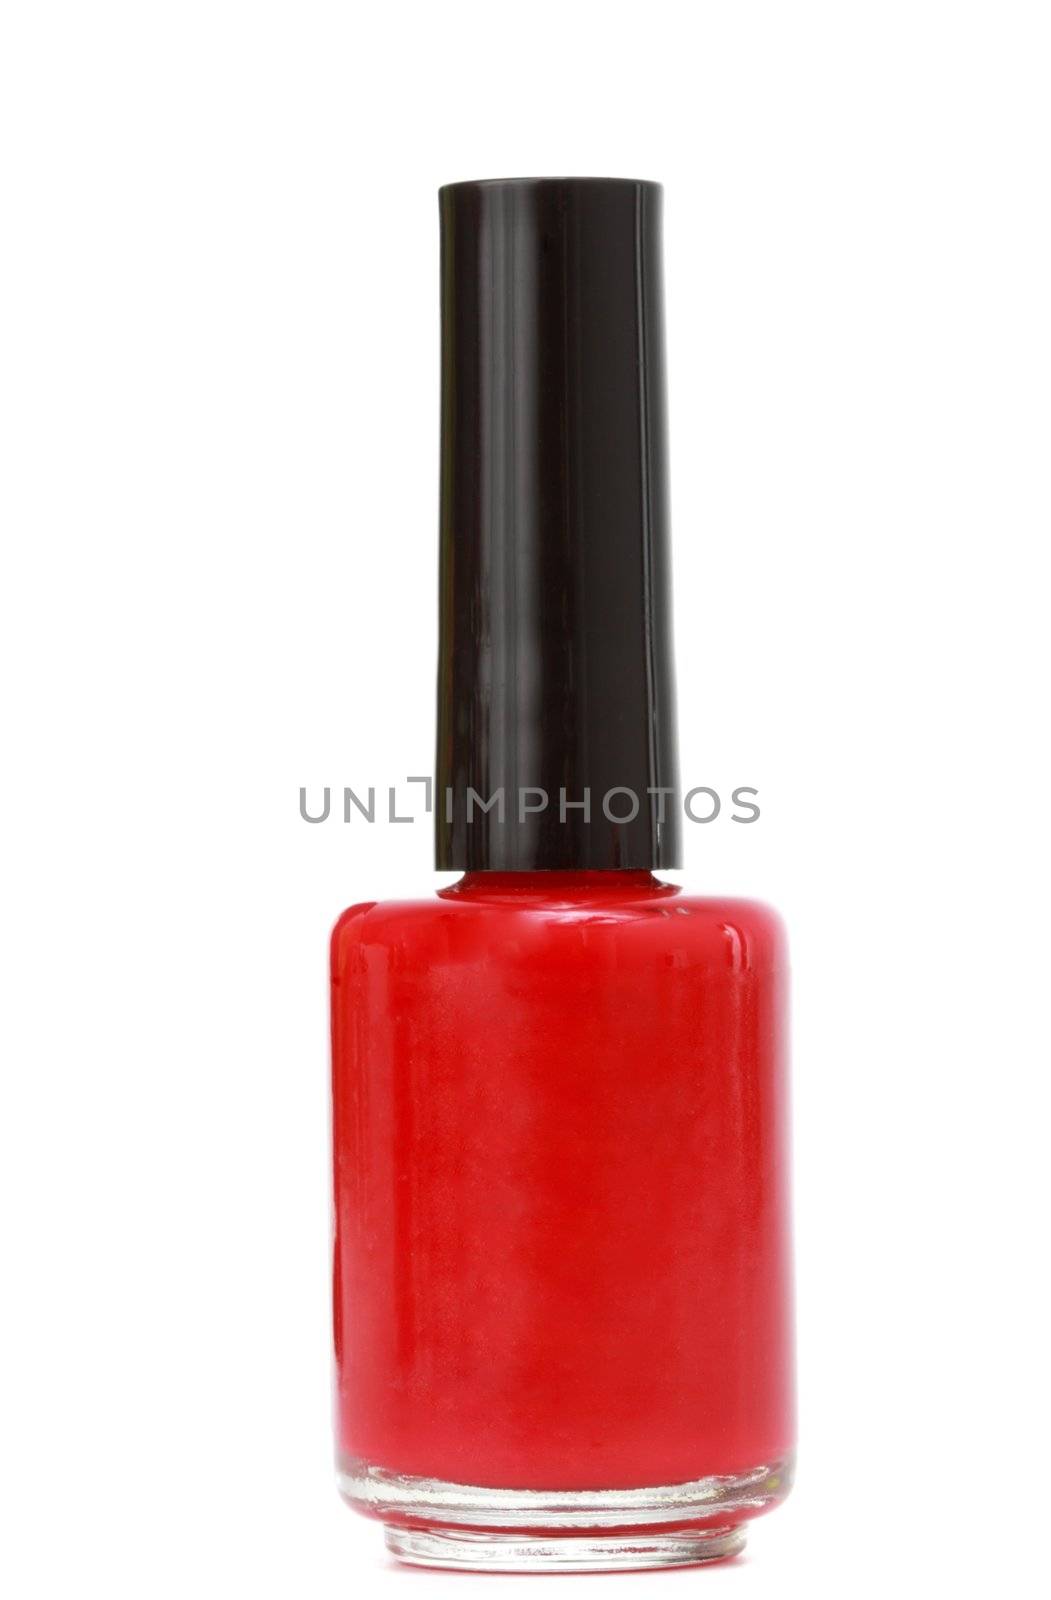 bottle of red nail polish, white background